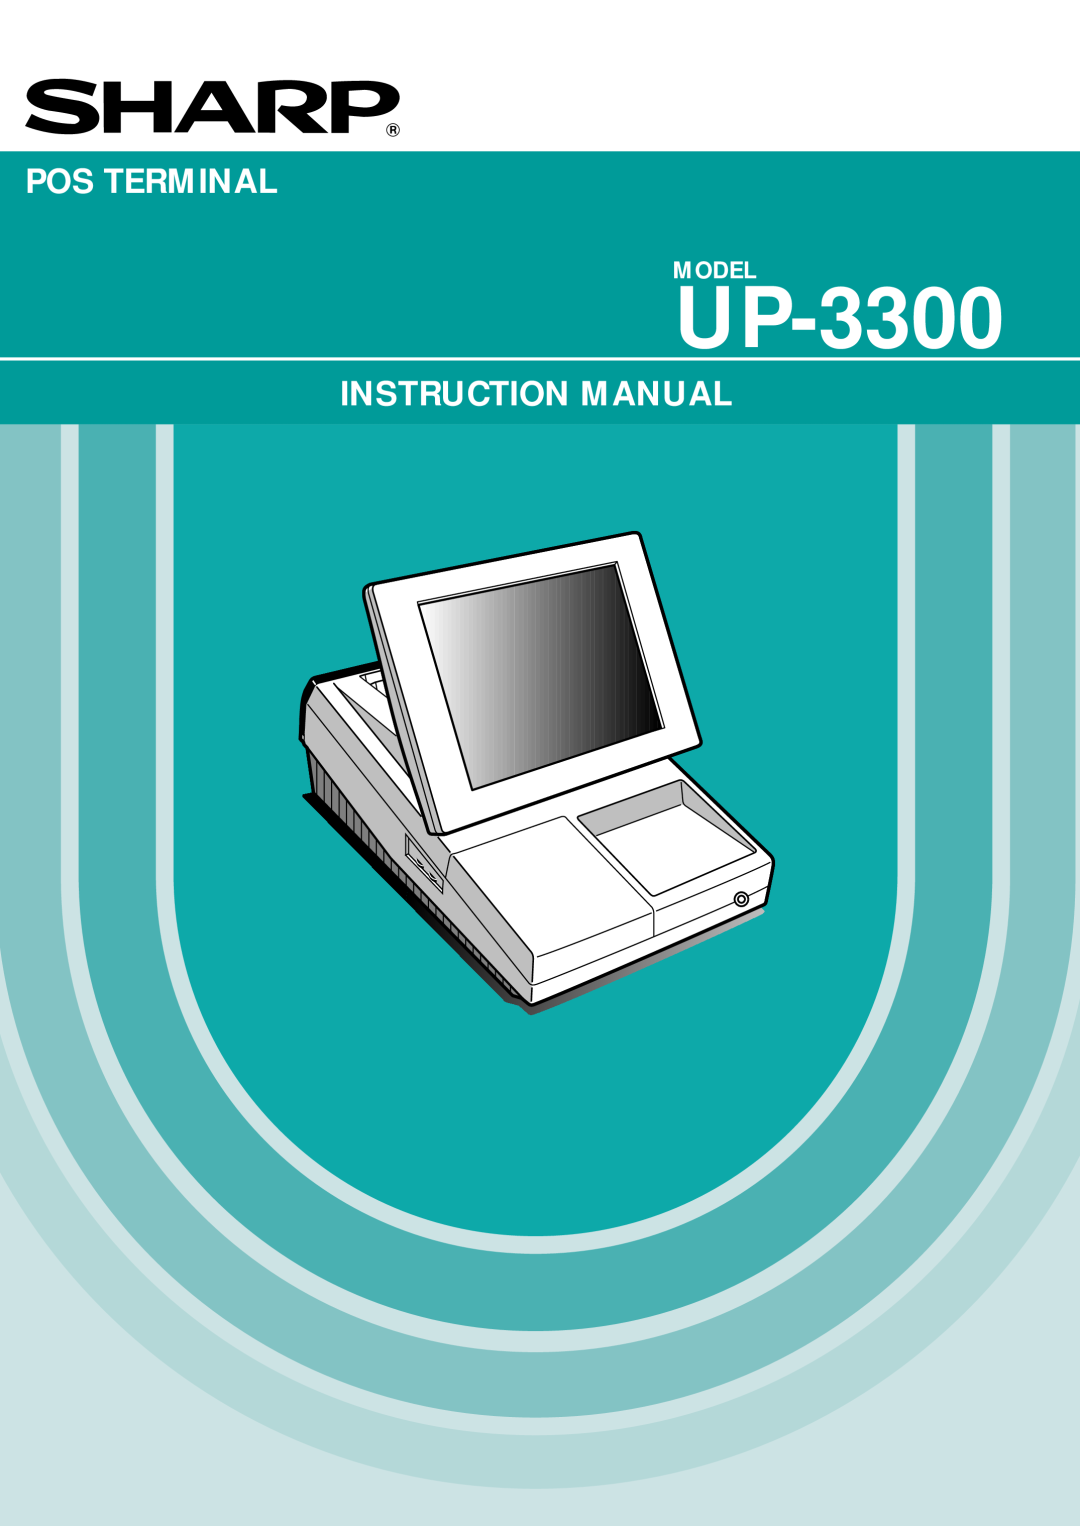 Sharp UP-3300 instruction manual Pos Terminal, Model 